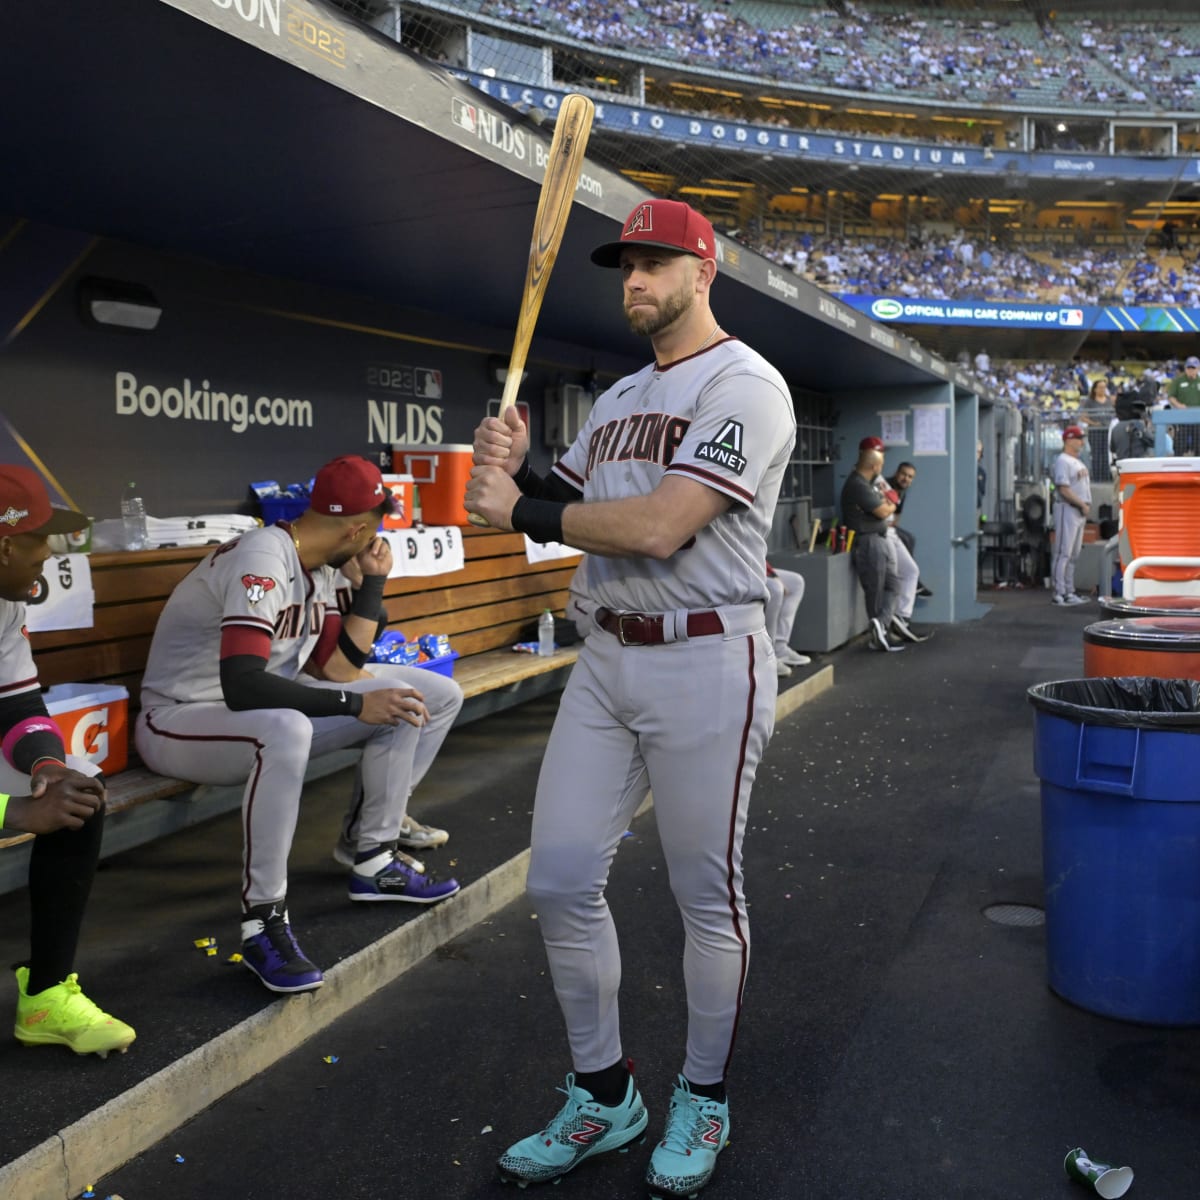 We're excited to KEEP IT GOING' - MLB vet Evan Longoria on